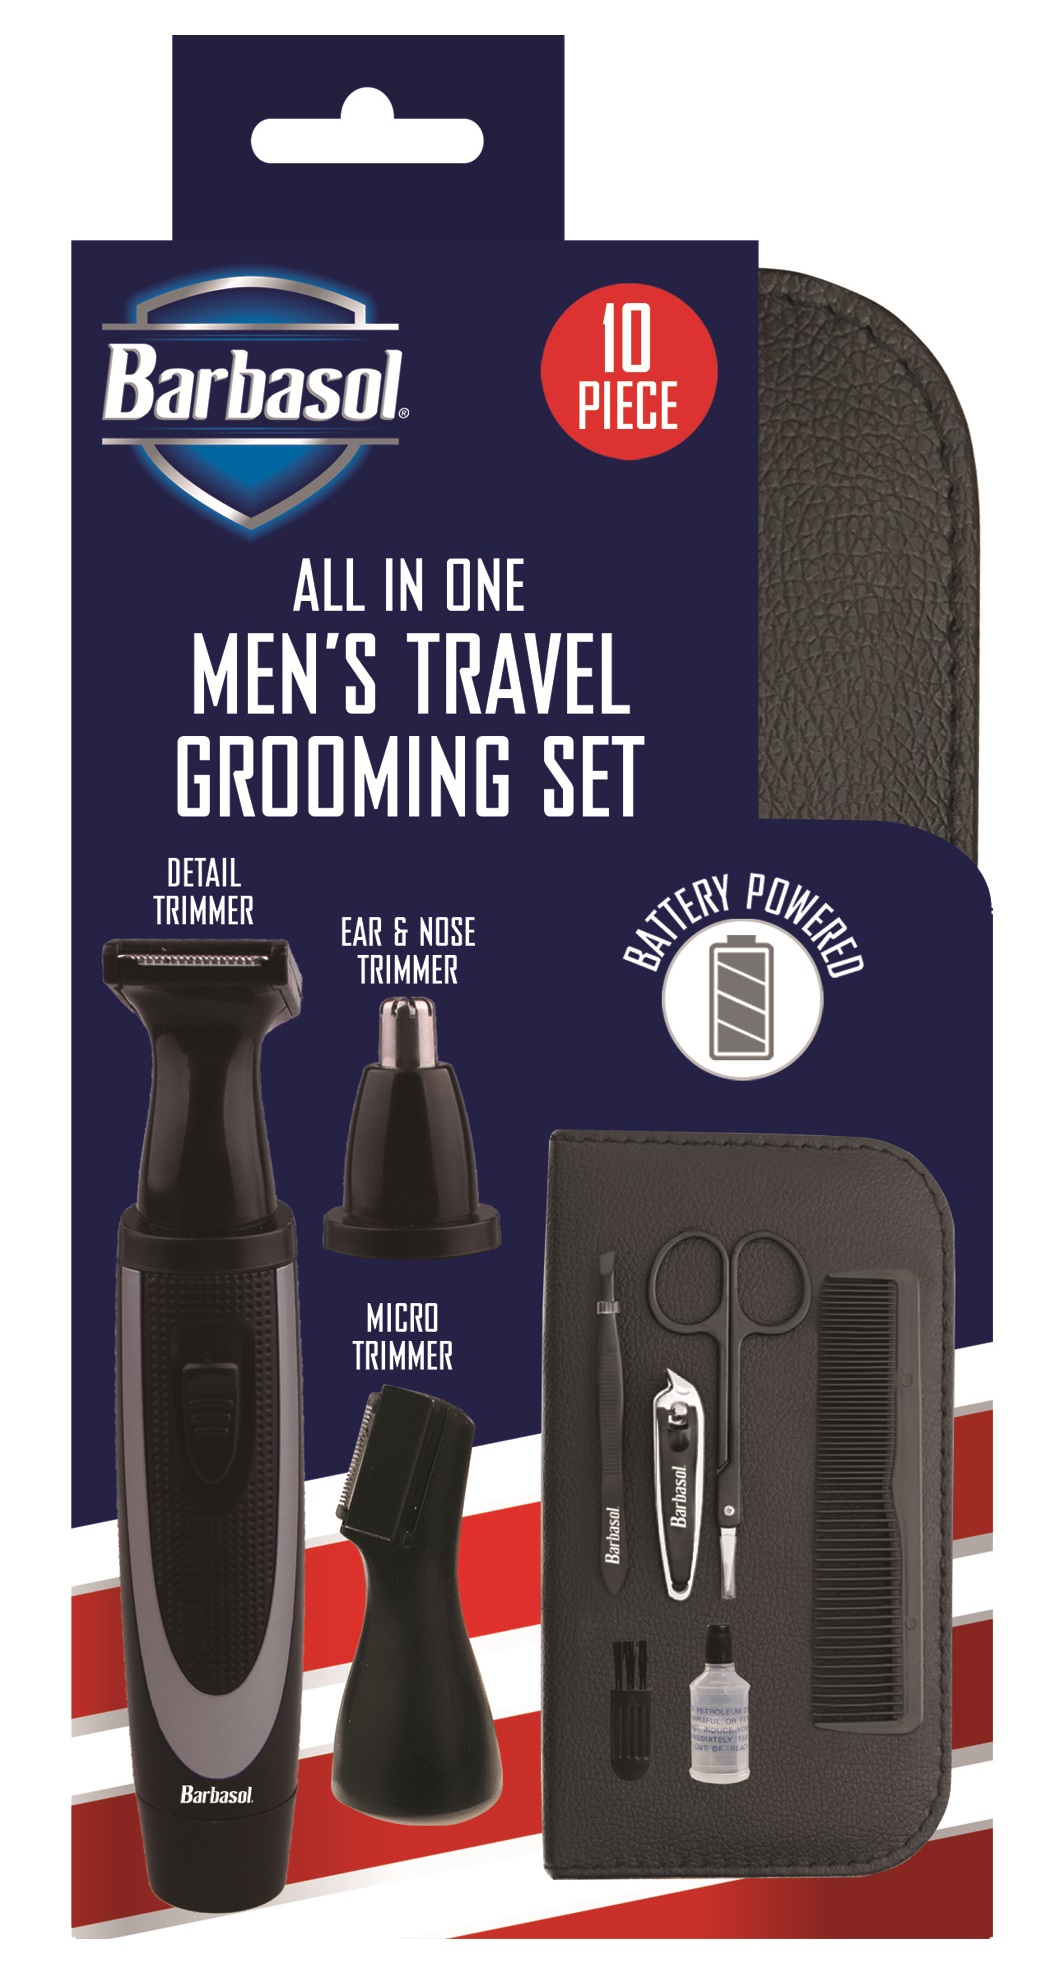 travel grooming kit items